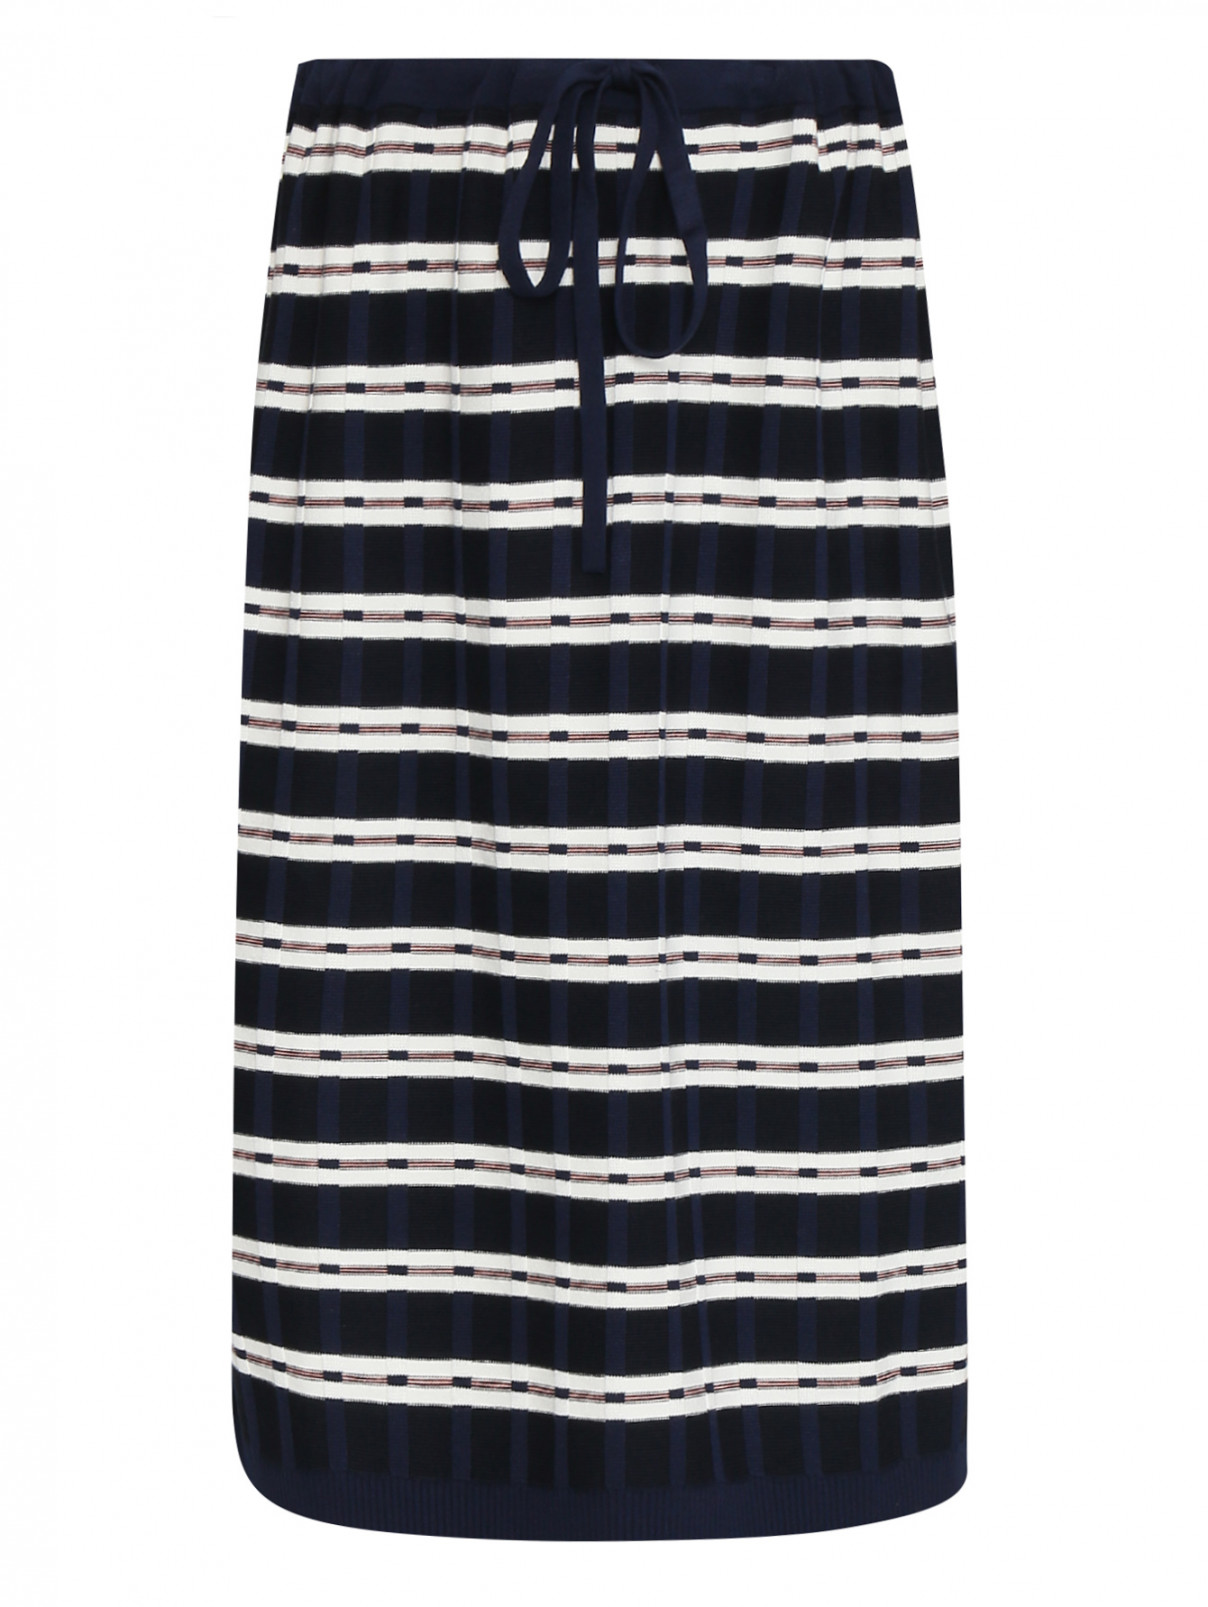 Трикотажная юбка с узором полоска Max&Co  –  Общий вид  – Цвет:  Синий